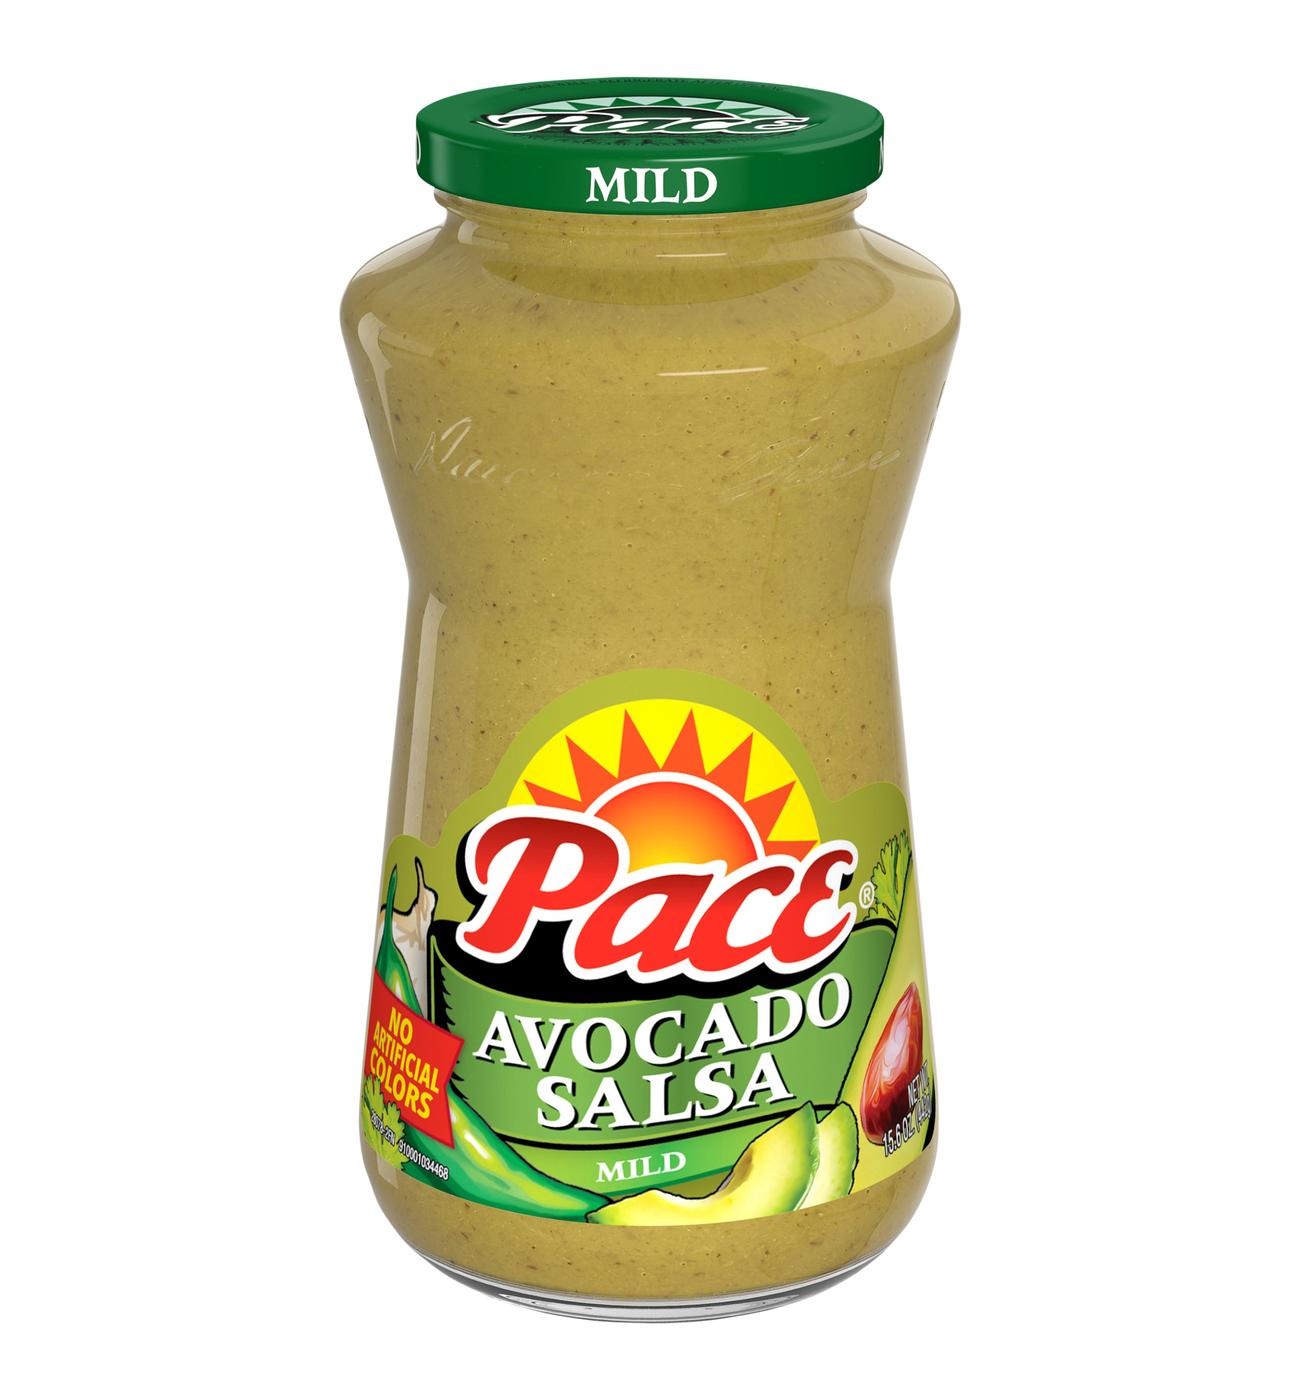 Pace Mild Avocado Salsa; image 1 of 2